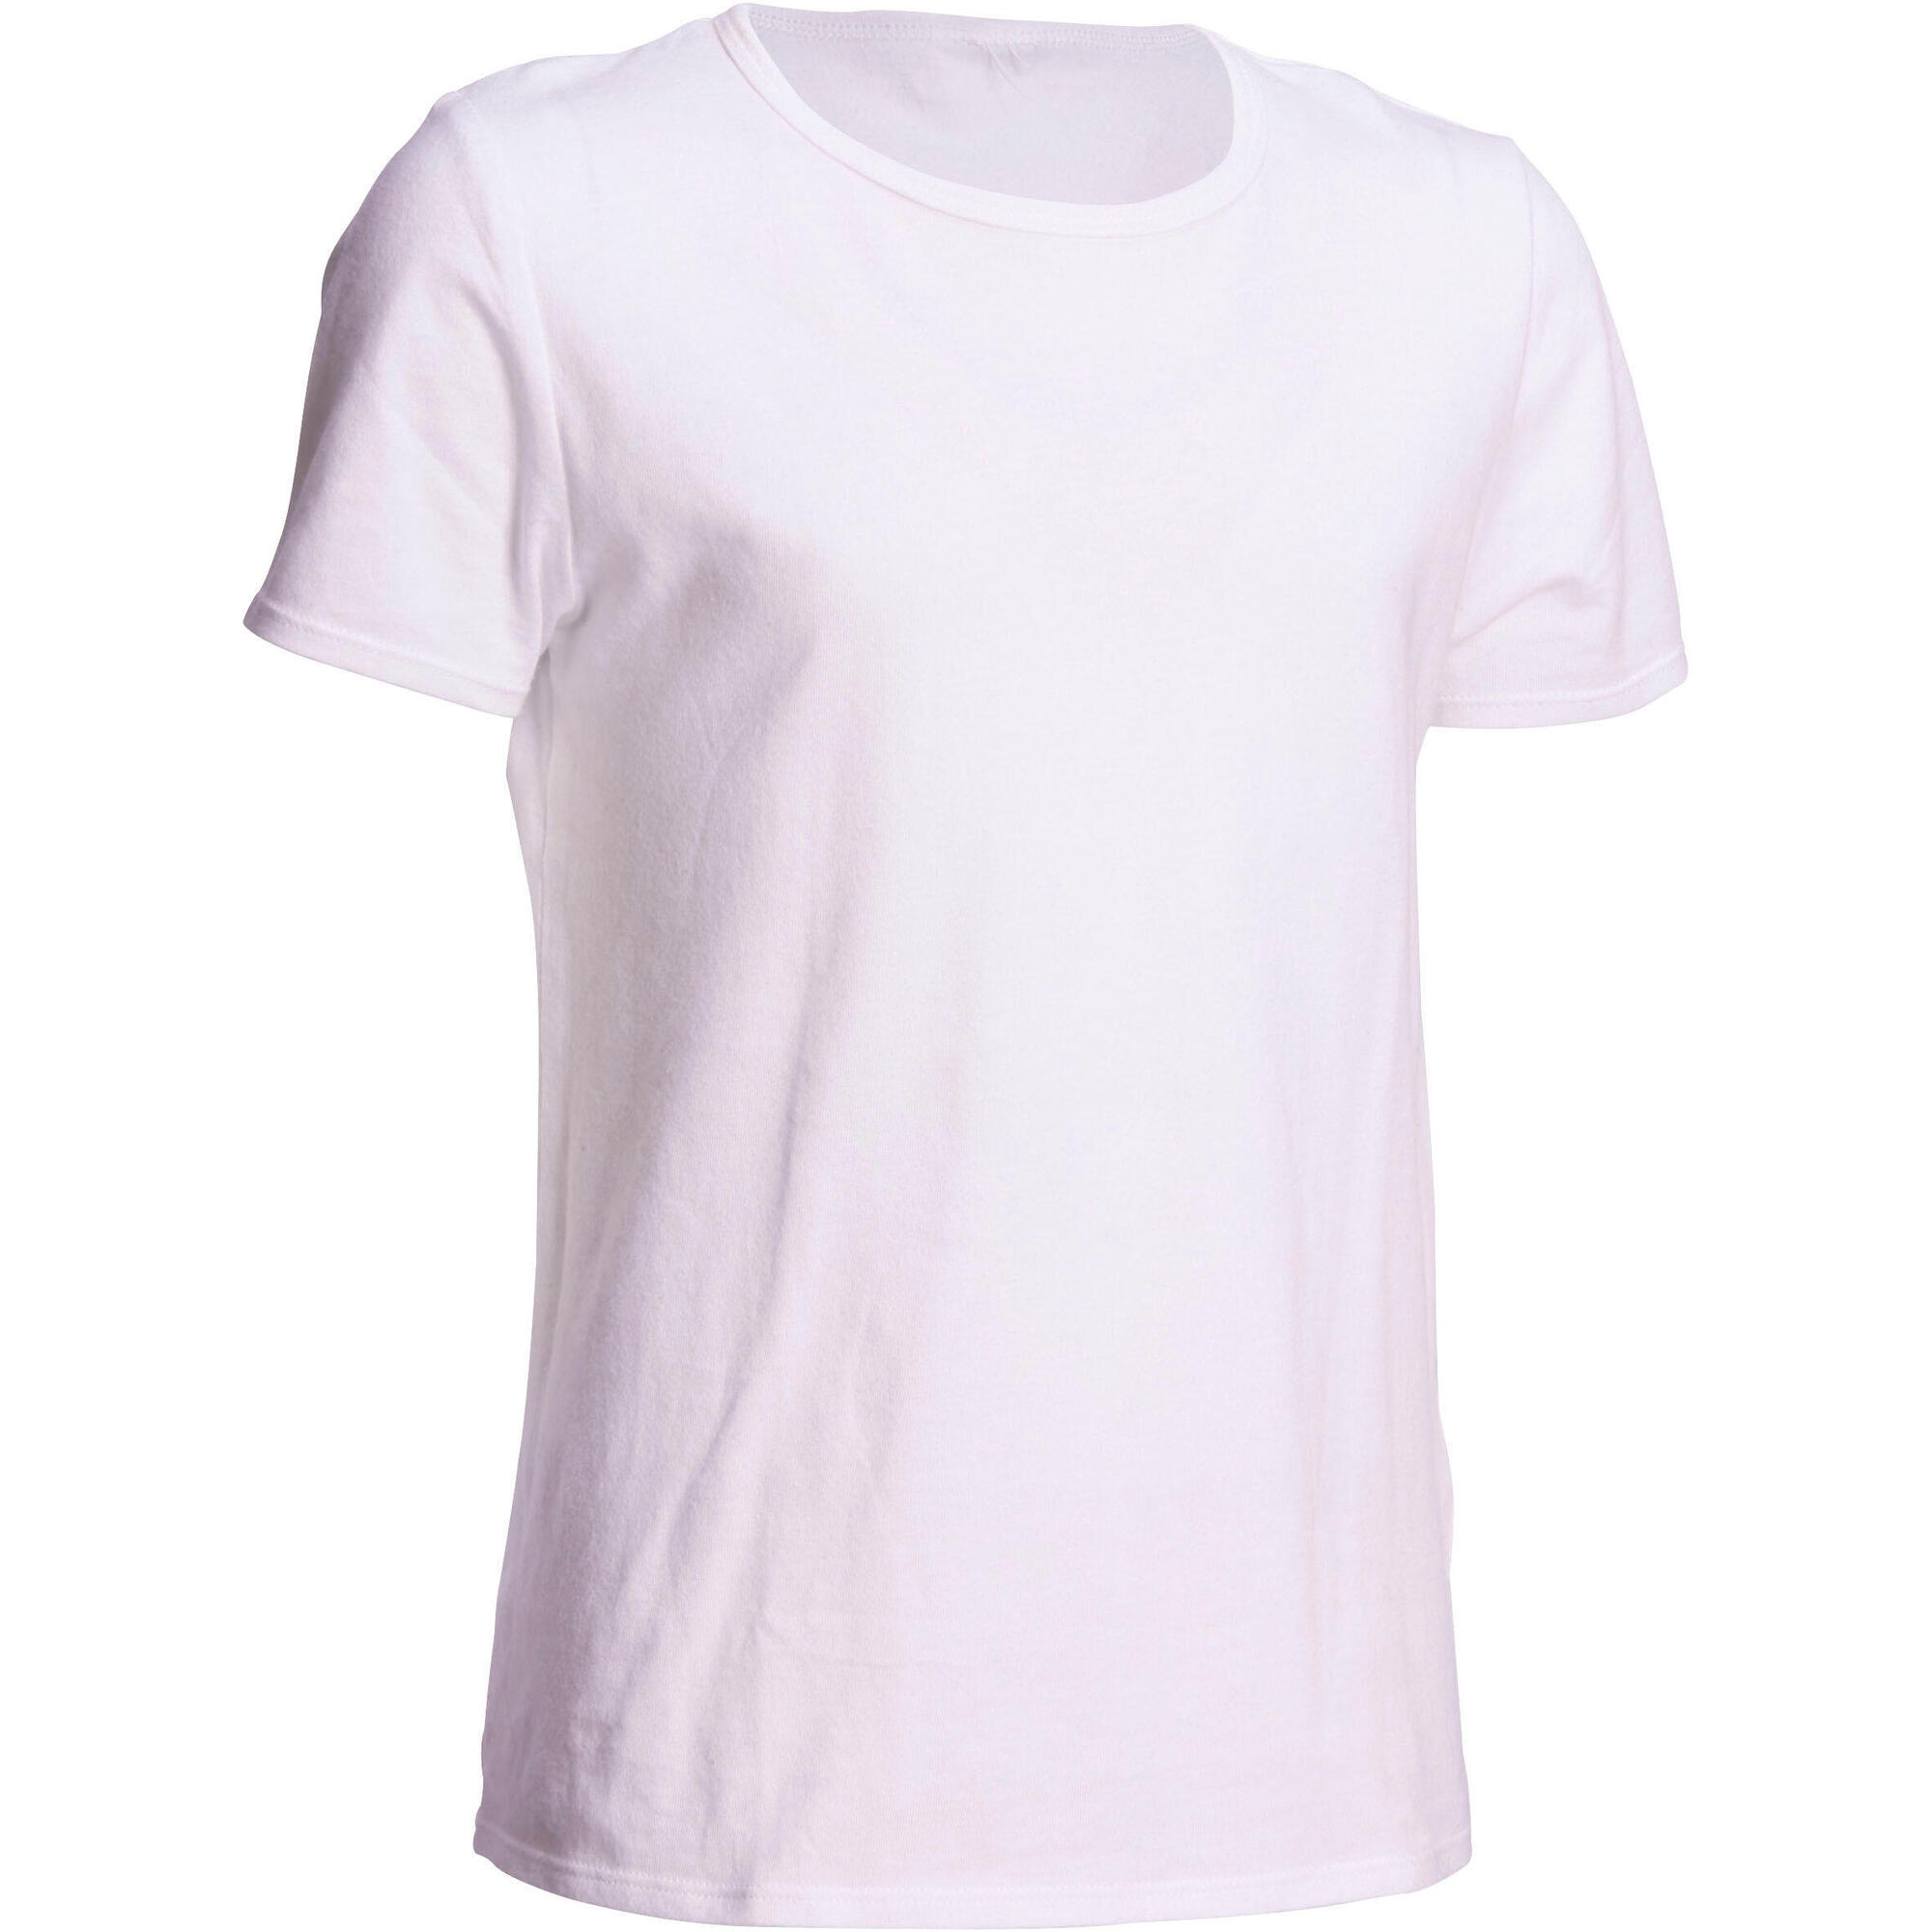 decathlon white t shirt